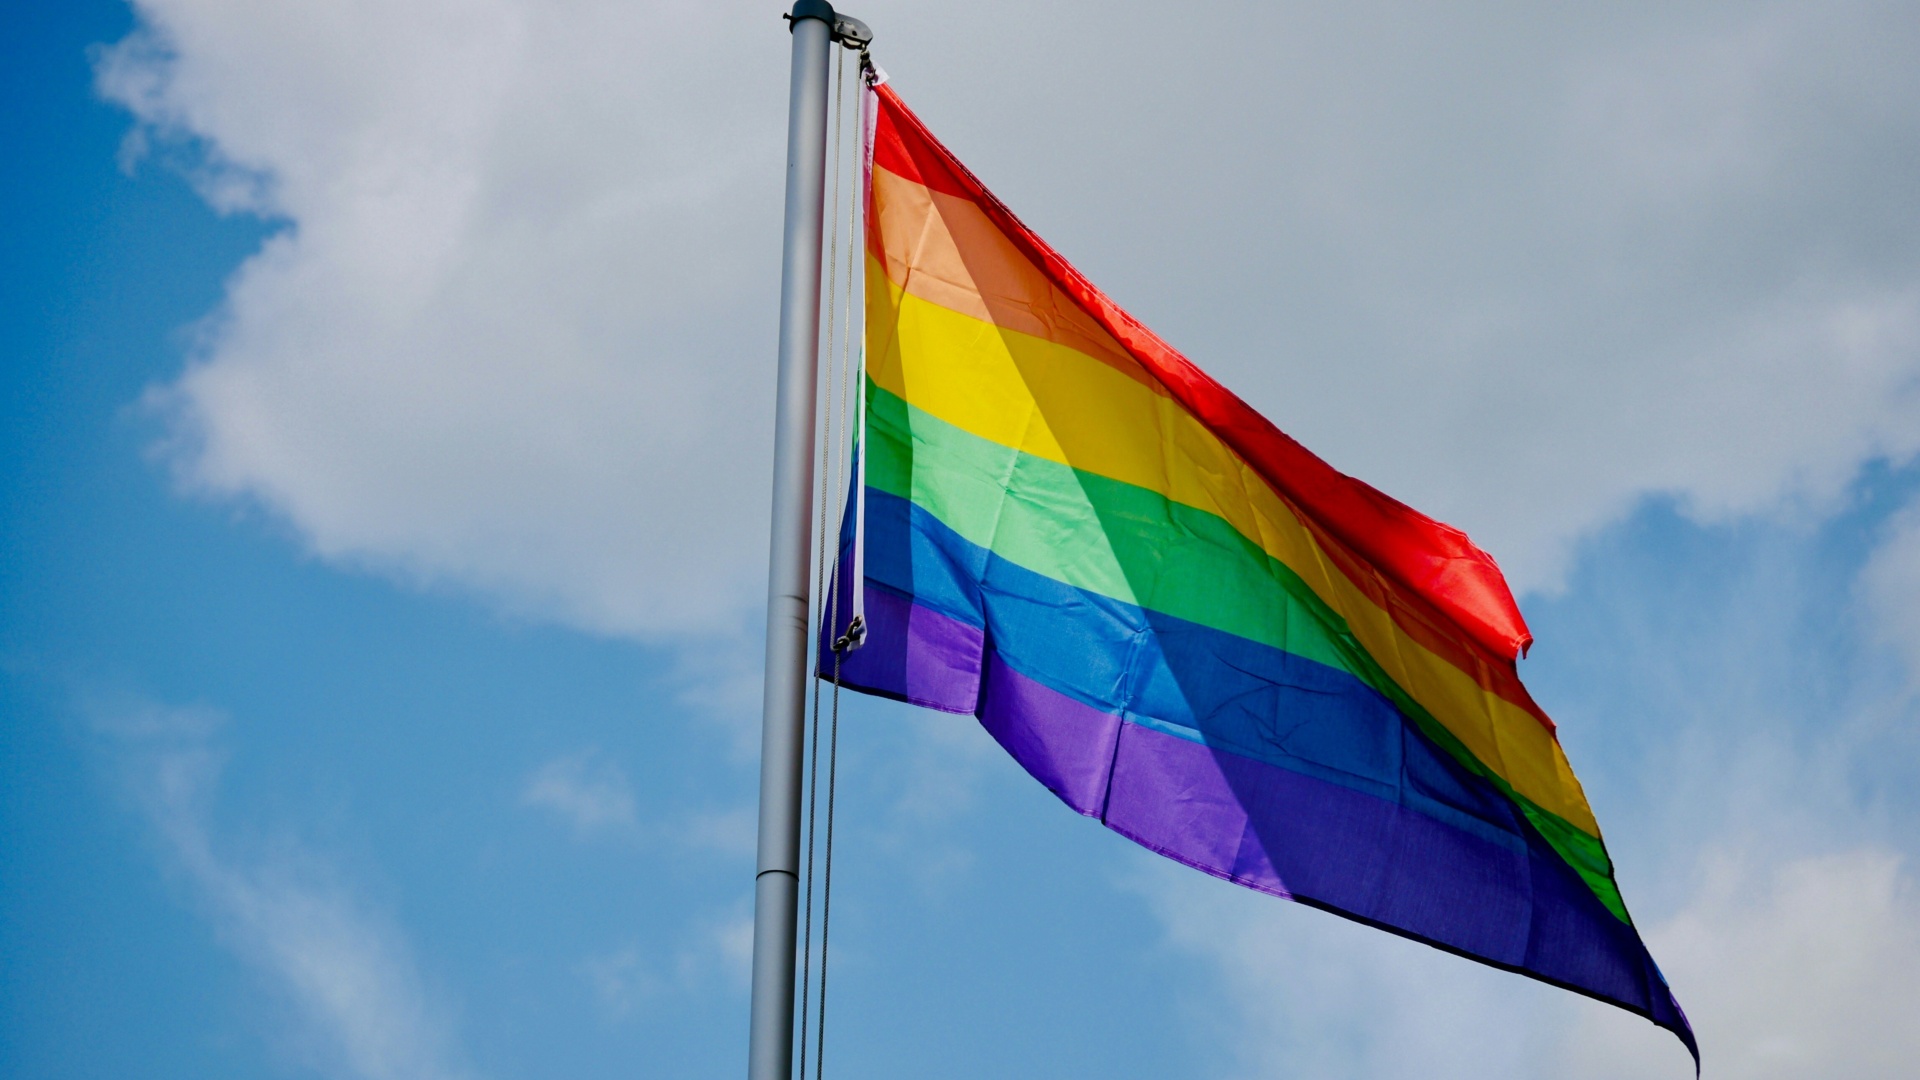 A rainbow-striped Pride flag flies against a blue sky background